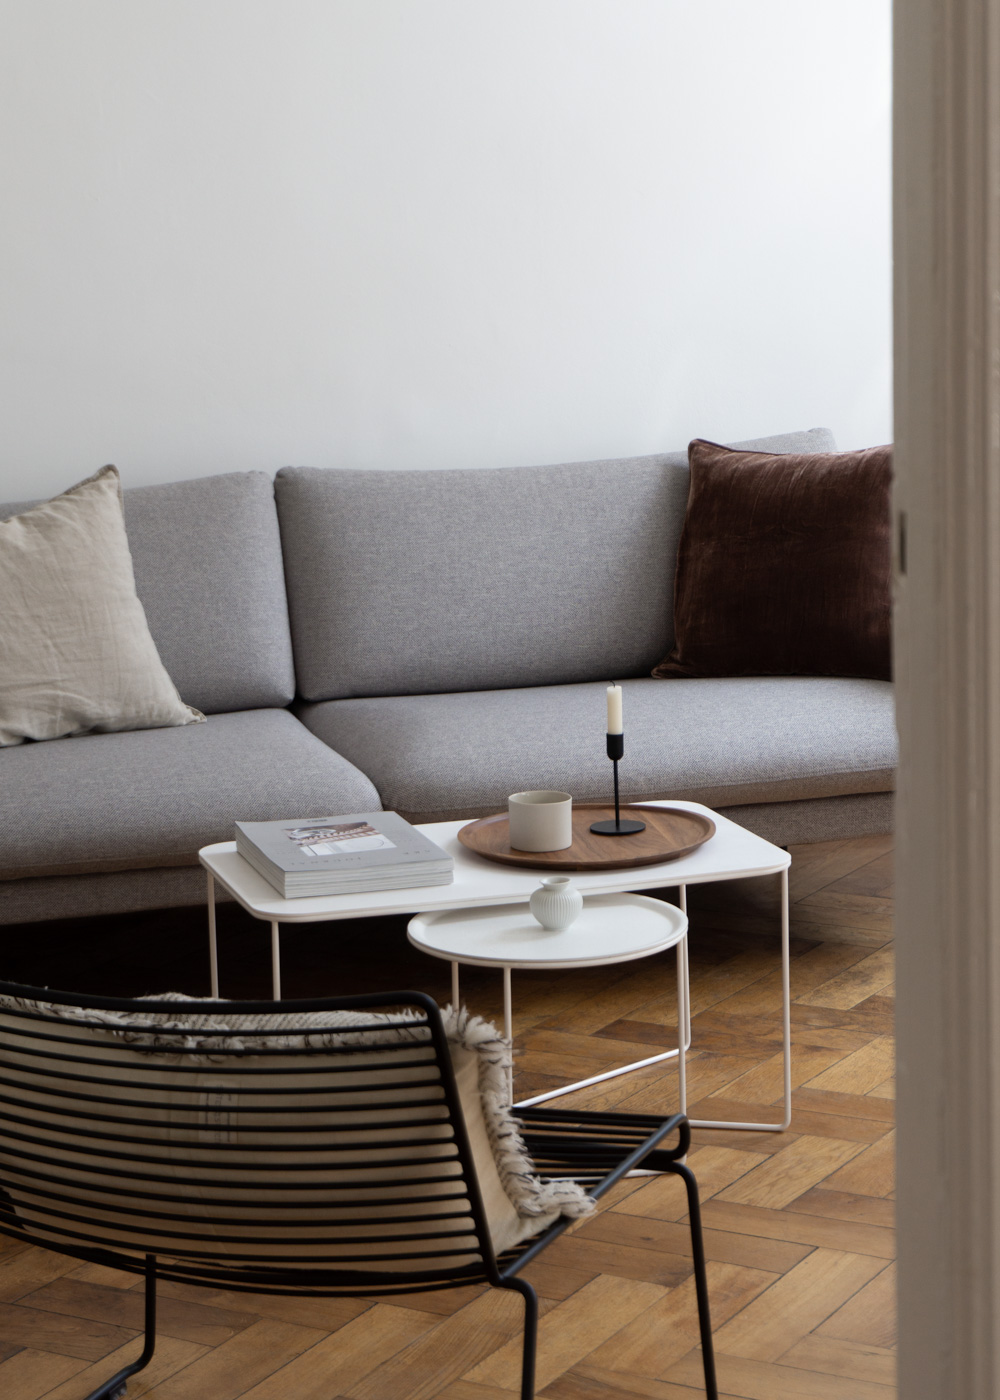 Grey Sofa | neutral interior, white and beige home, wood floors, minimalist simple decor, natural berlin apartment, scandinavian design, calm aesthetic